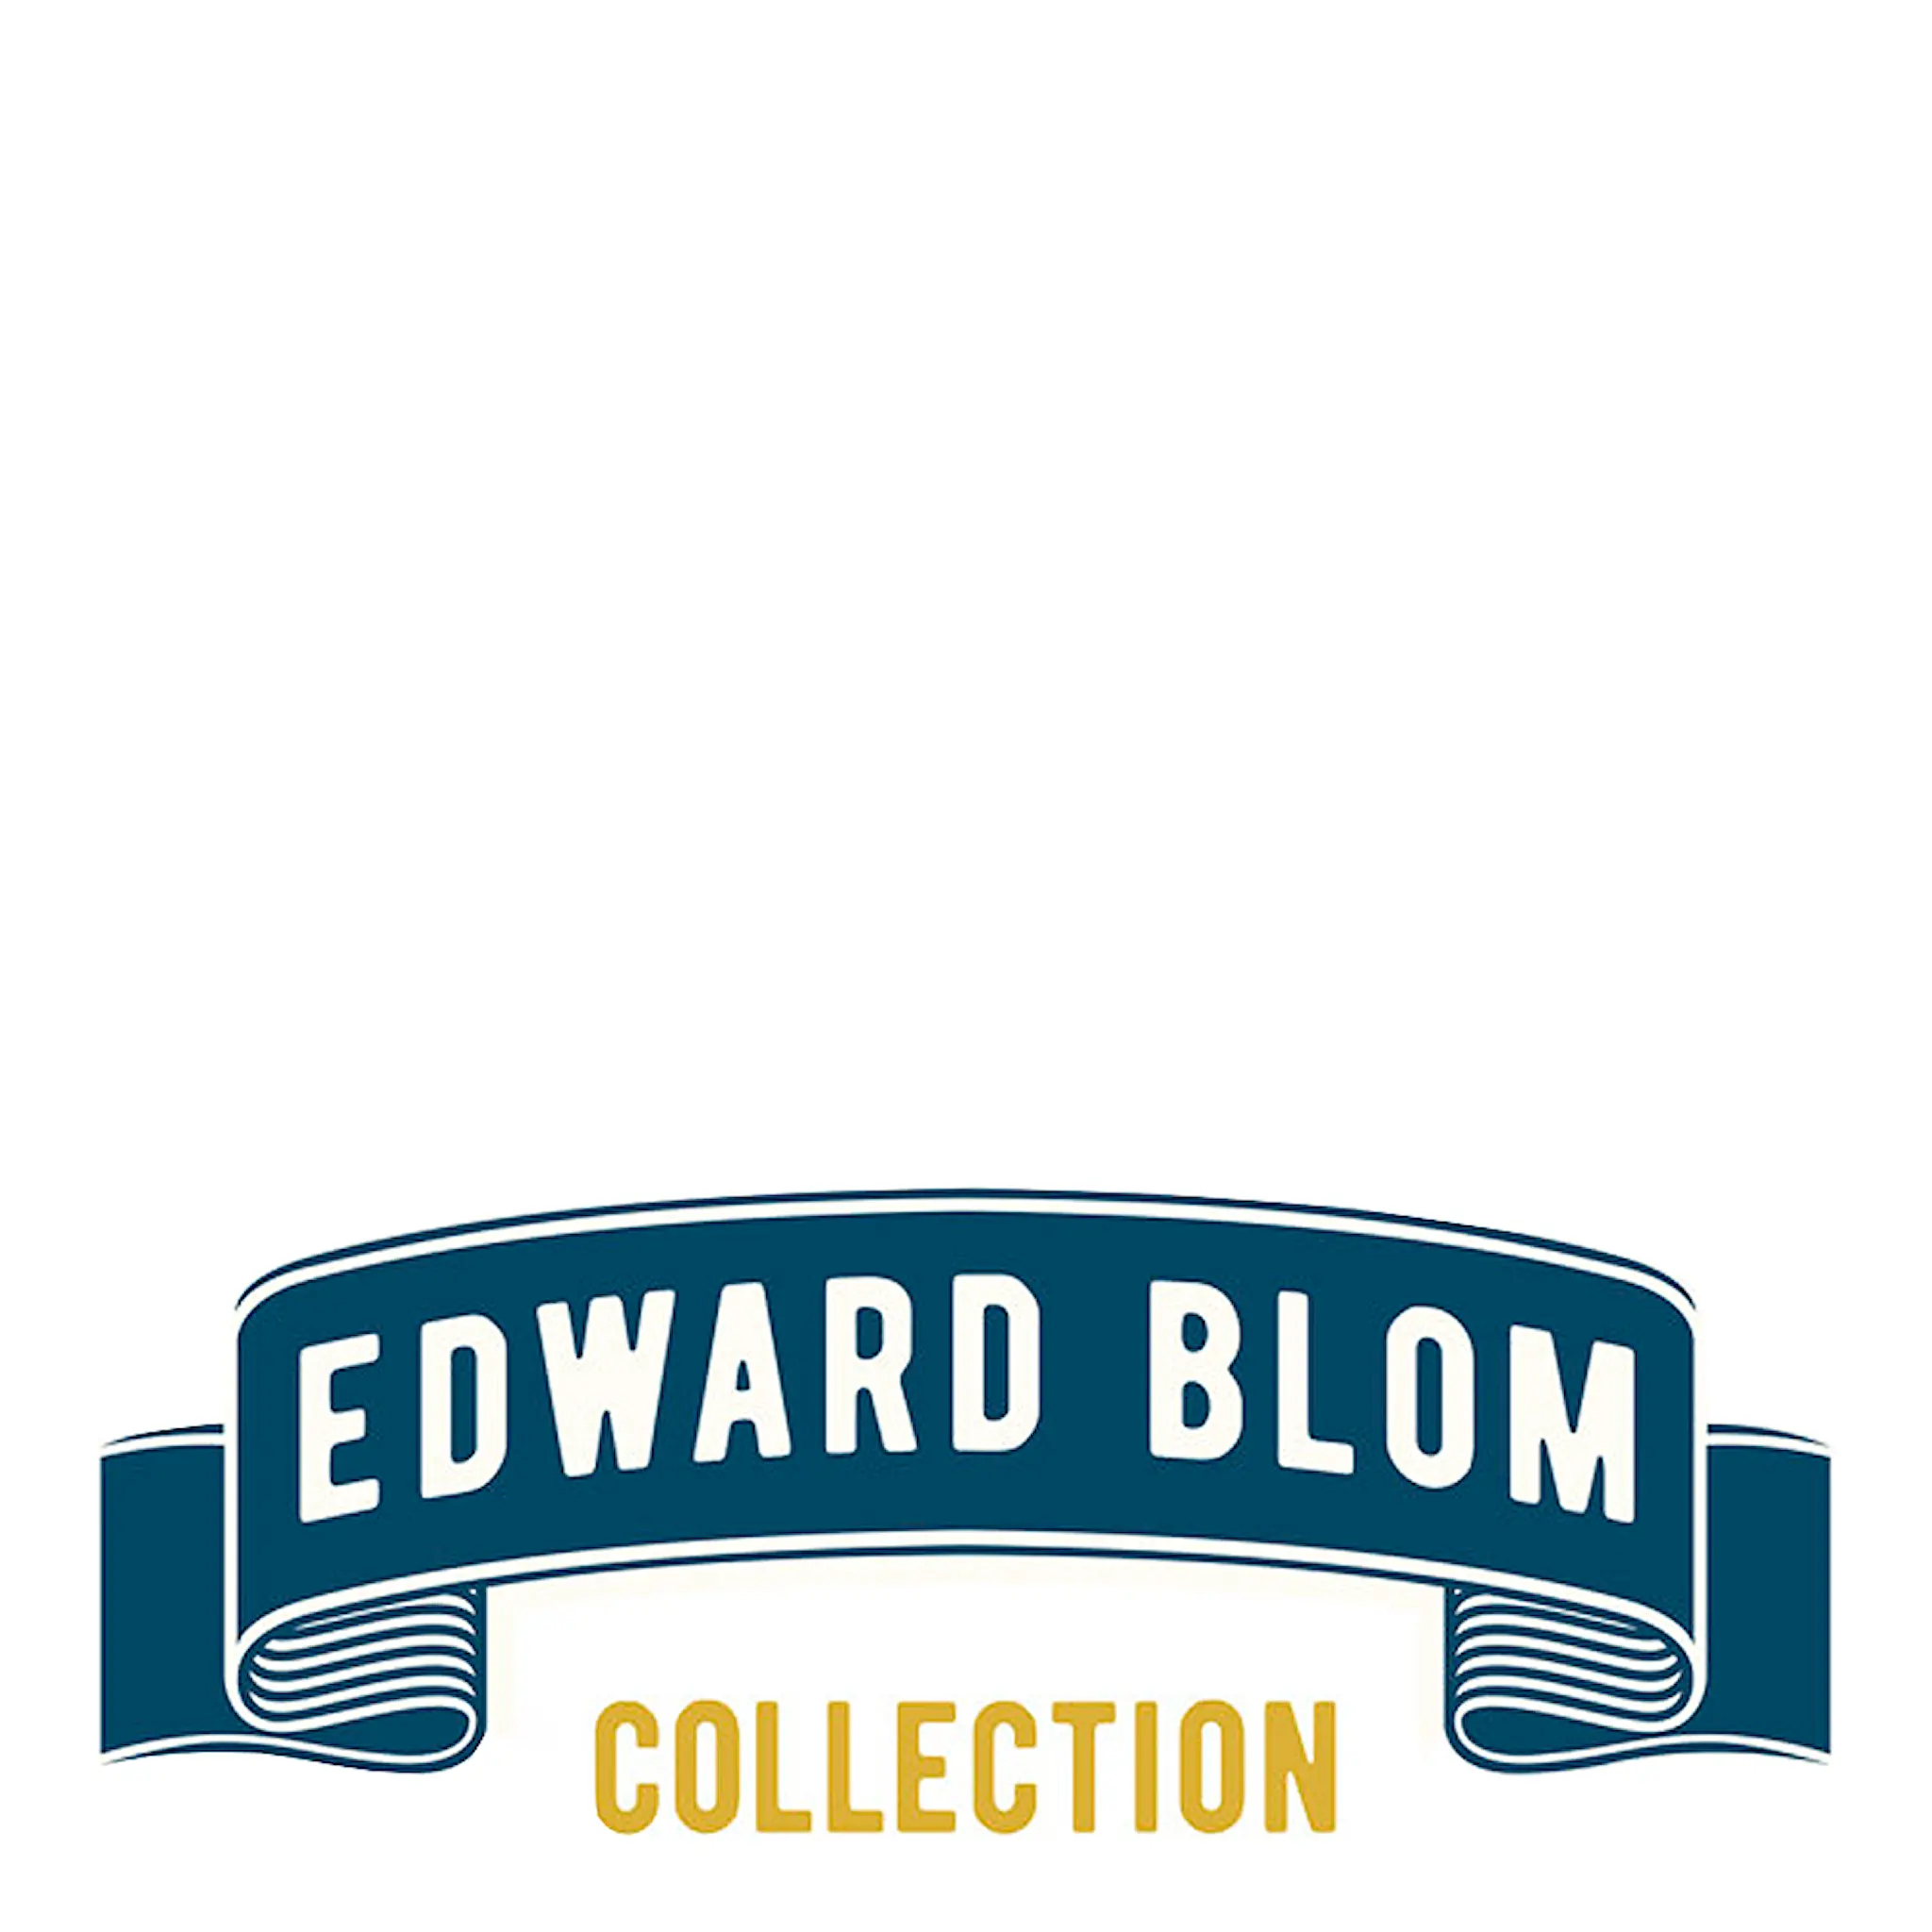 Edward Blom Collection Olutlasi Nro. 2